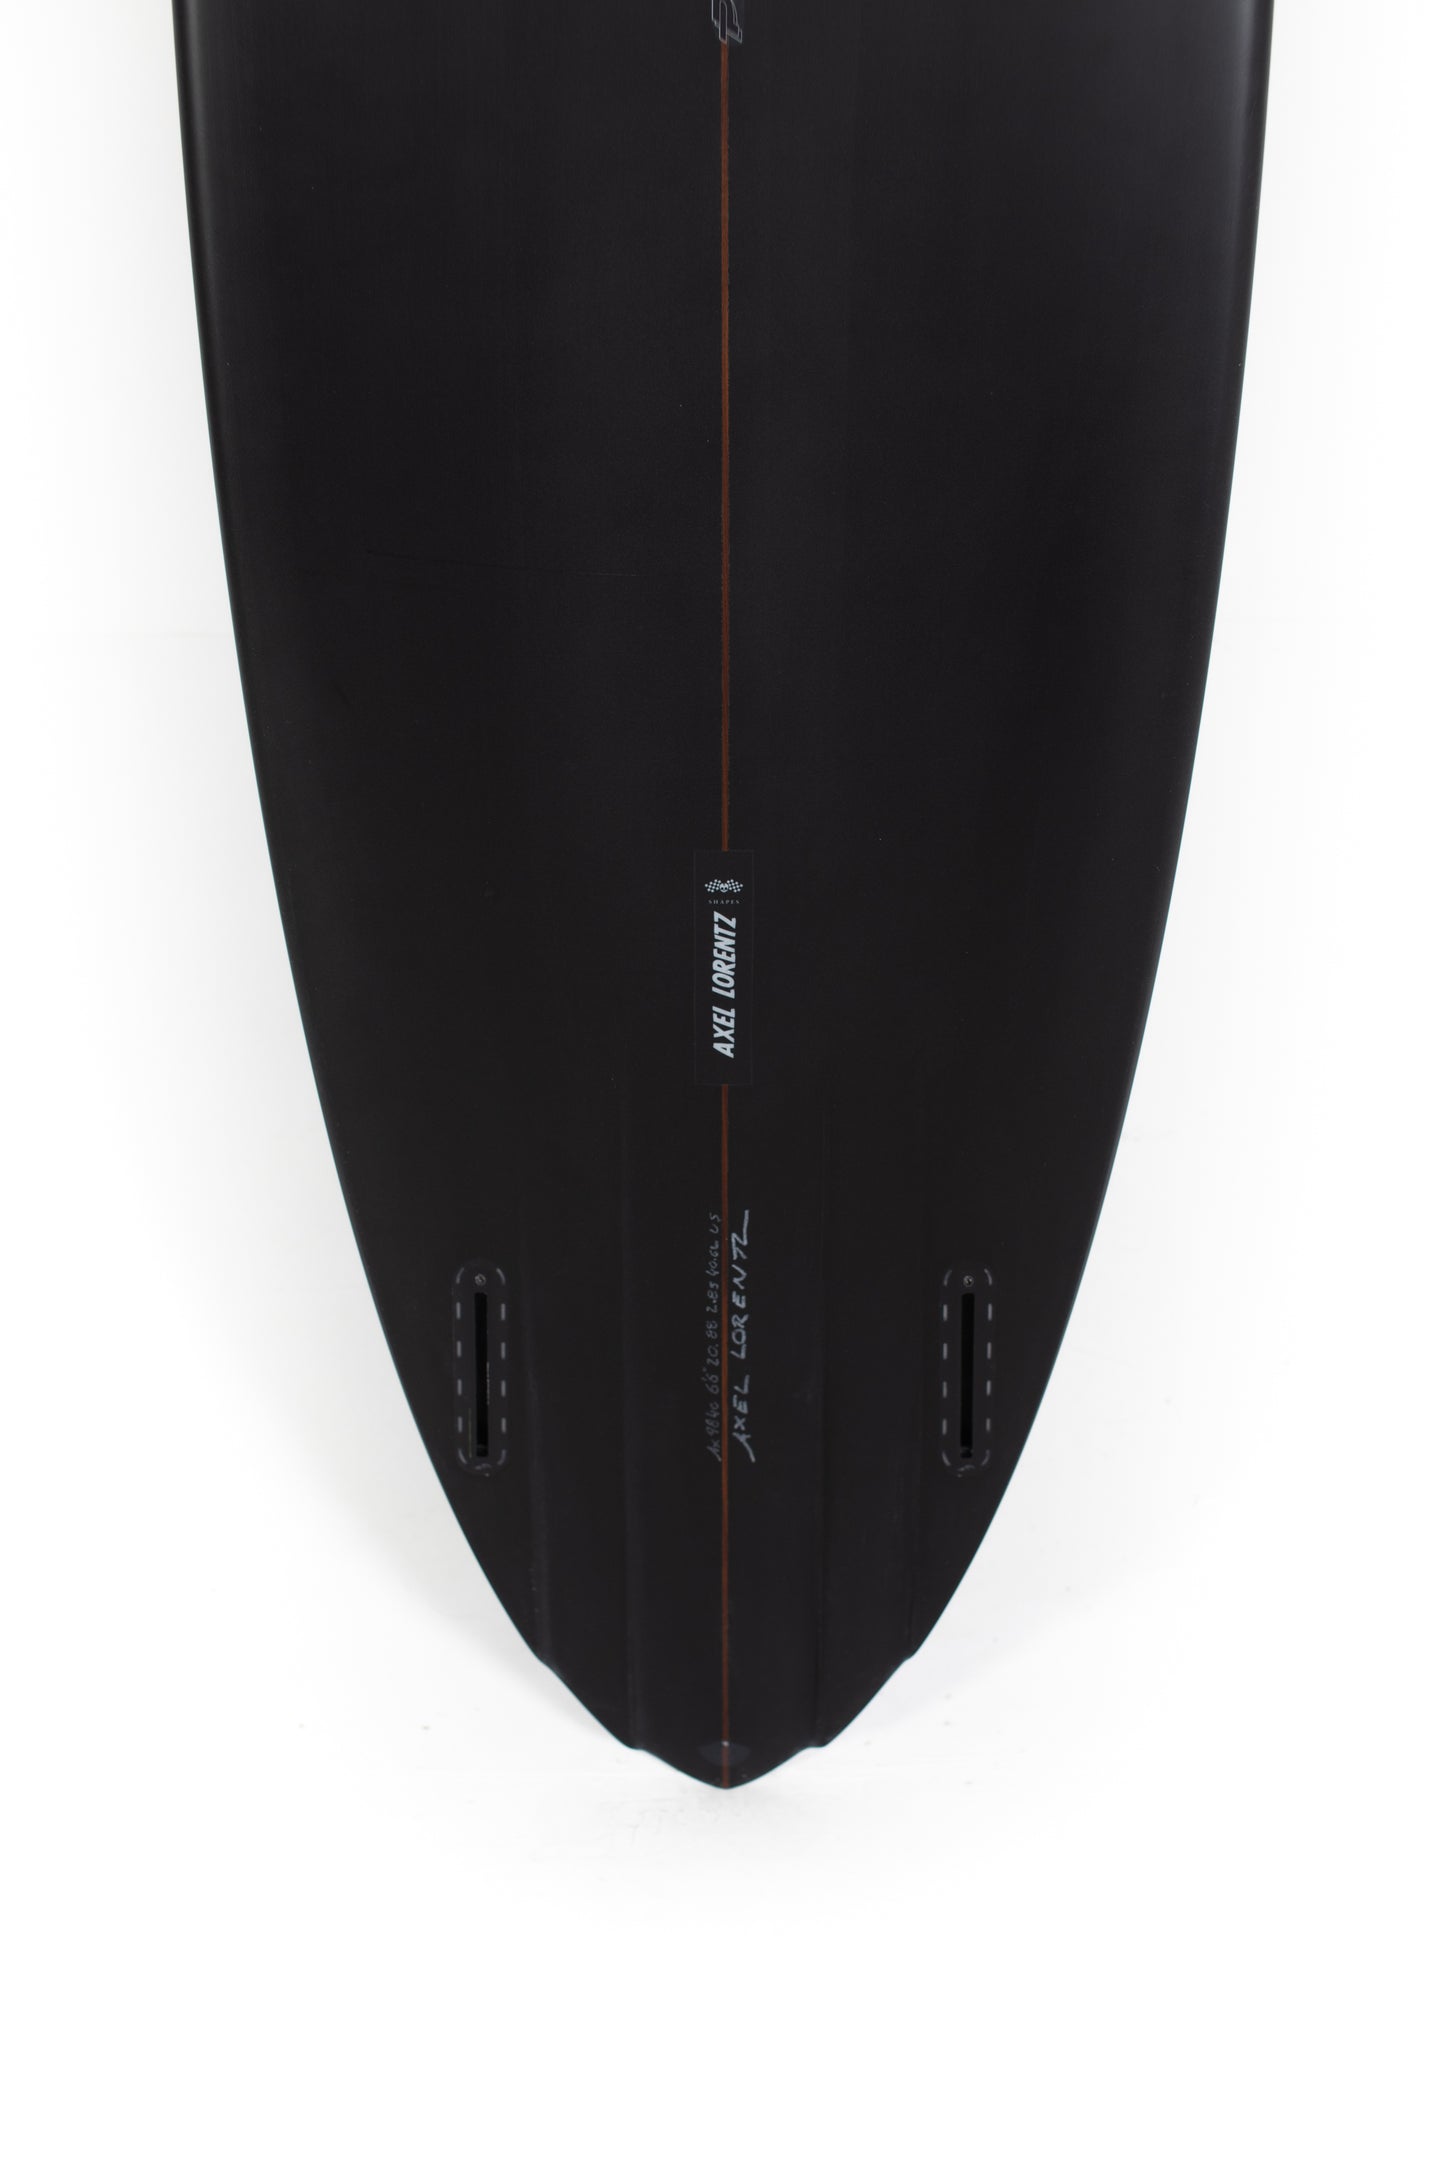 
                  
                    Pukas Surf Shop - Pukas Surfboard - LADY TWIN by Axel Lorentz - 6’6” x 20,88 x 2,85 - 40,57L - AX09840
                  
                